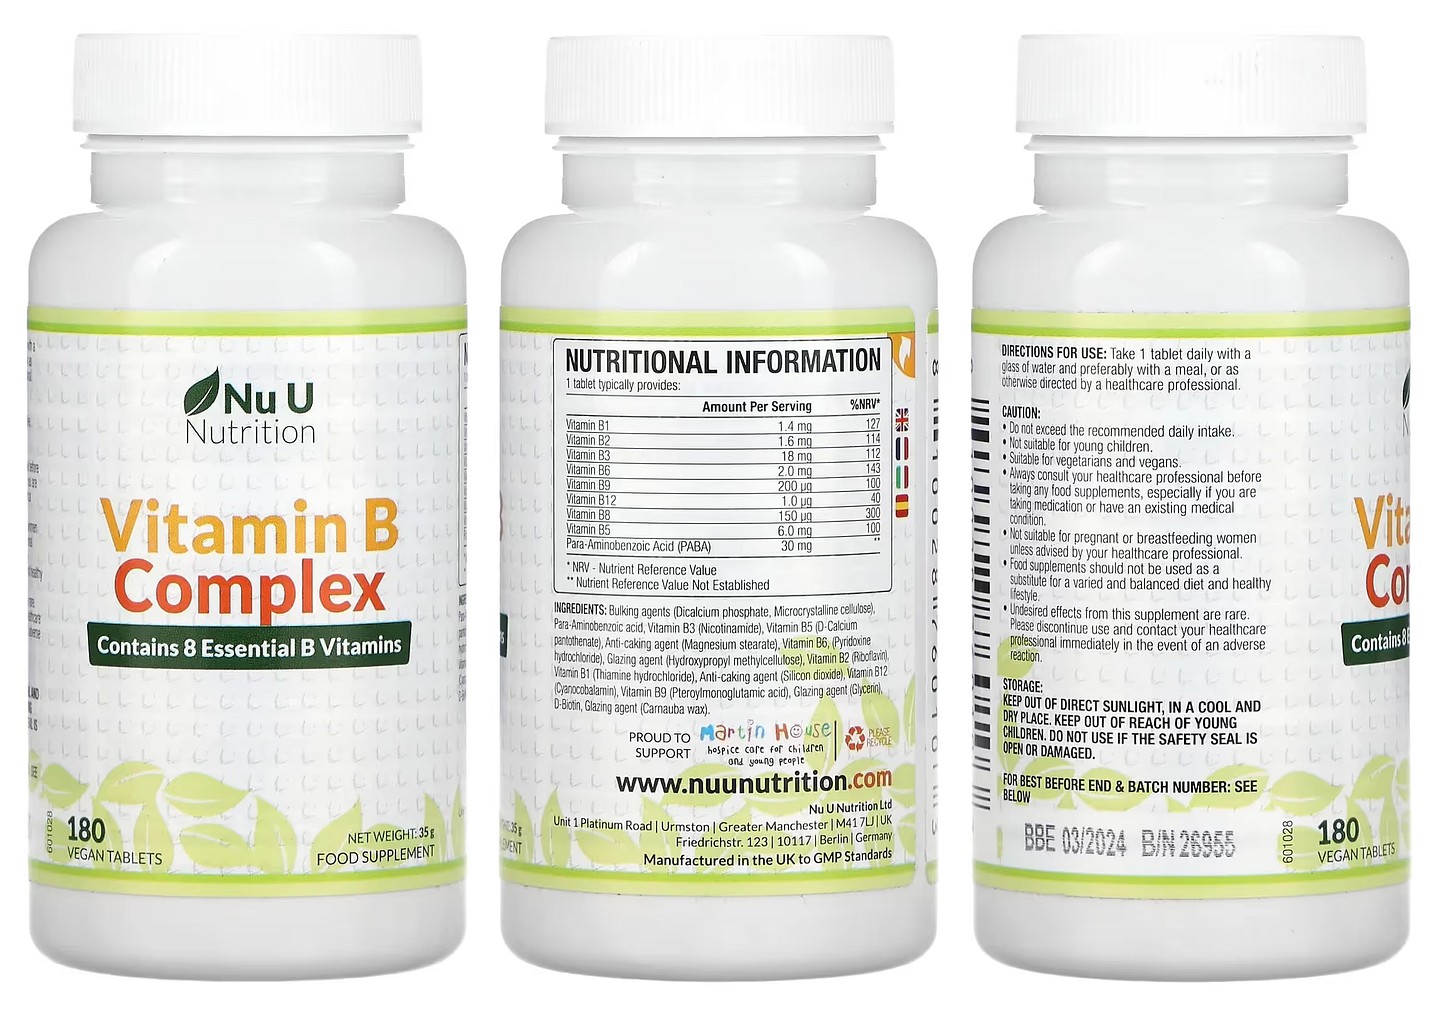 Nu U Nutrition, Vitamin B Complex packaging